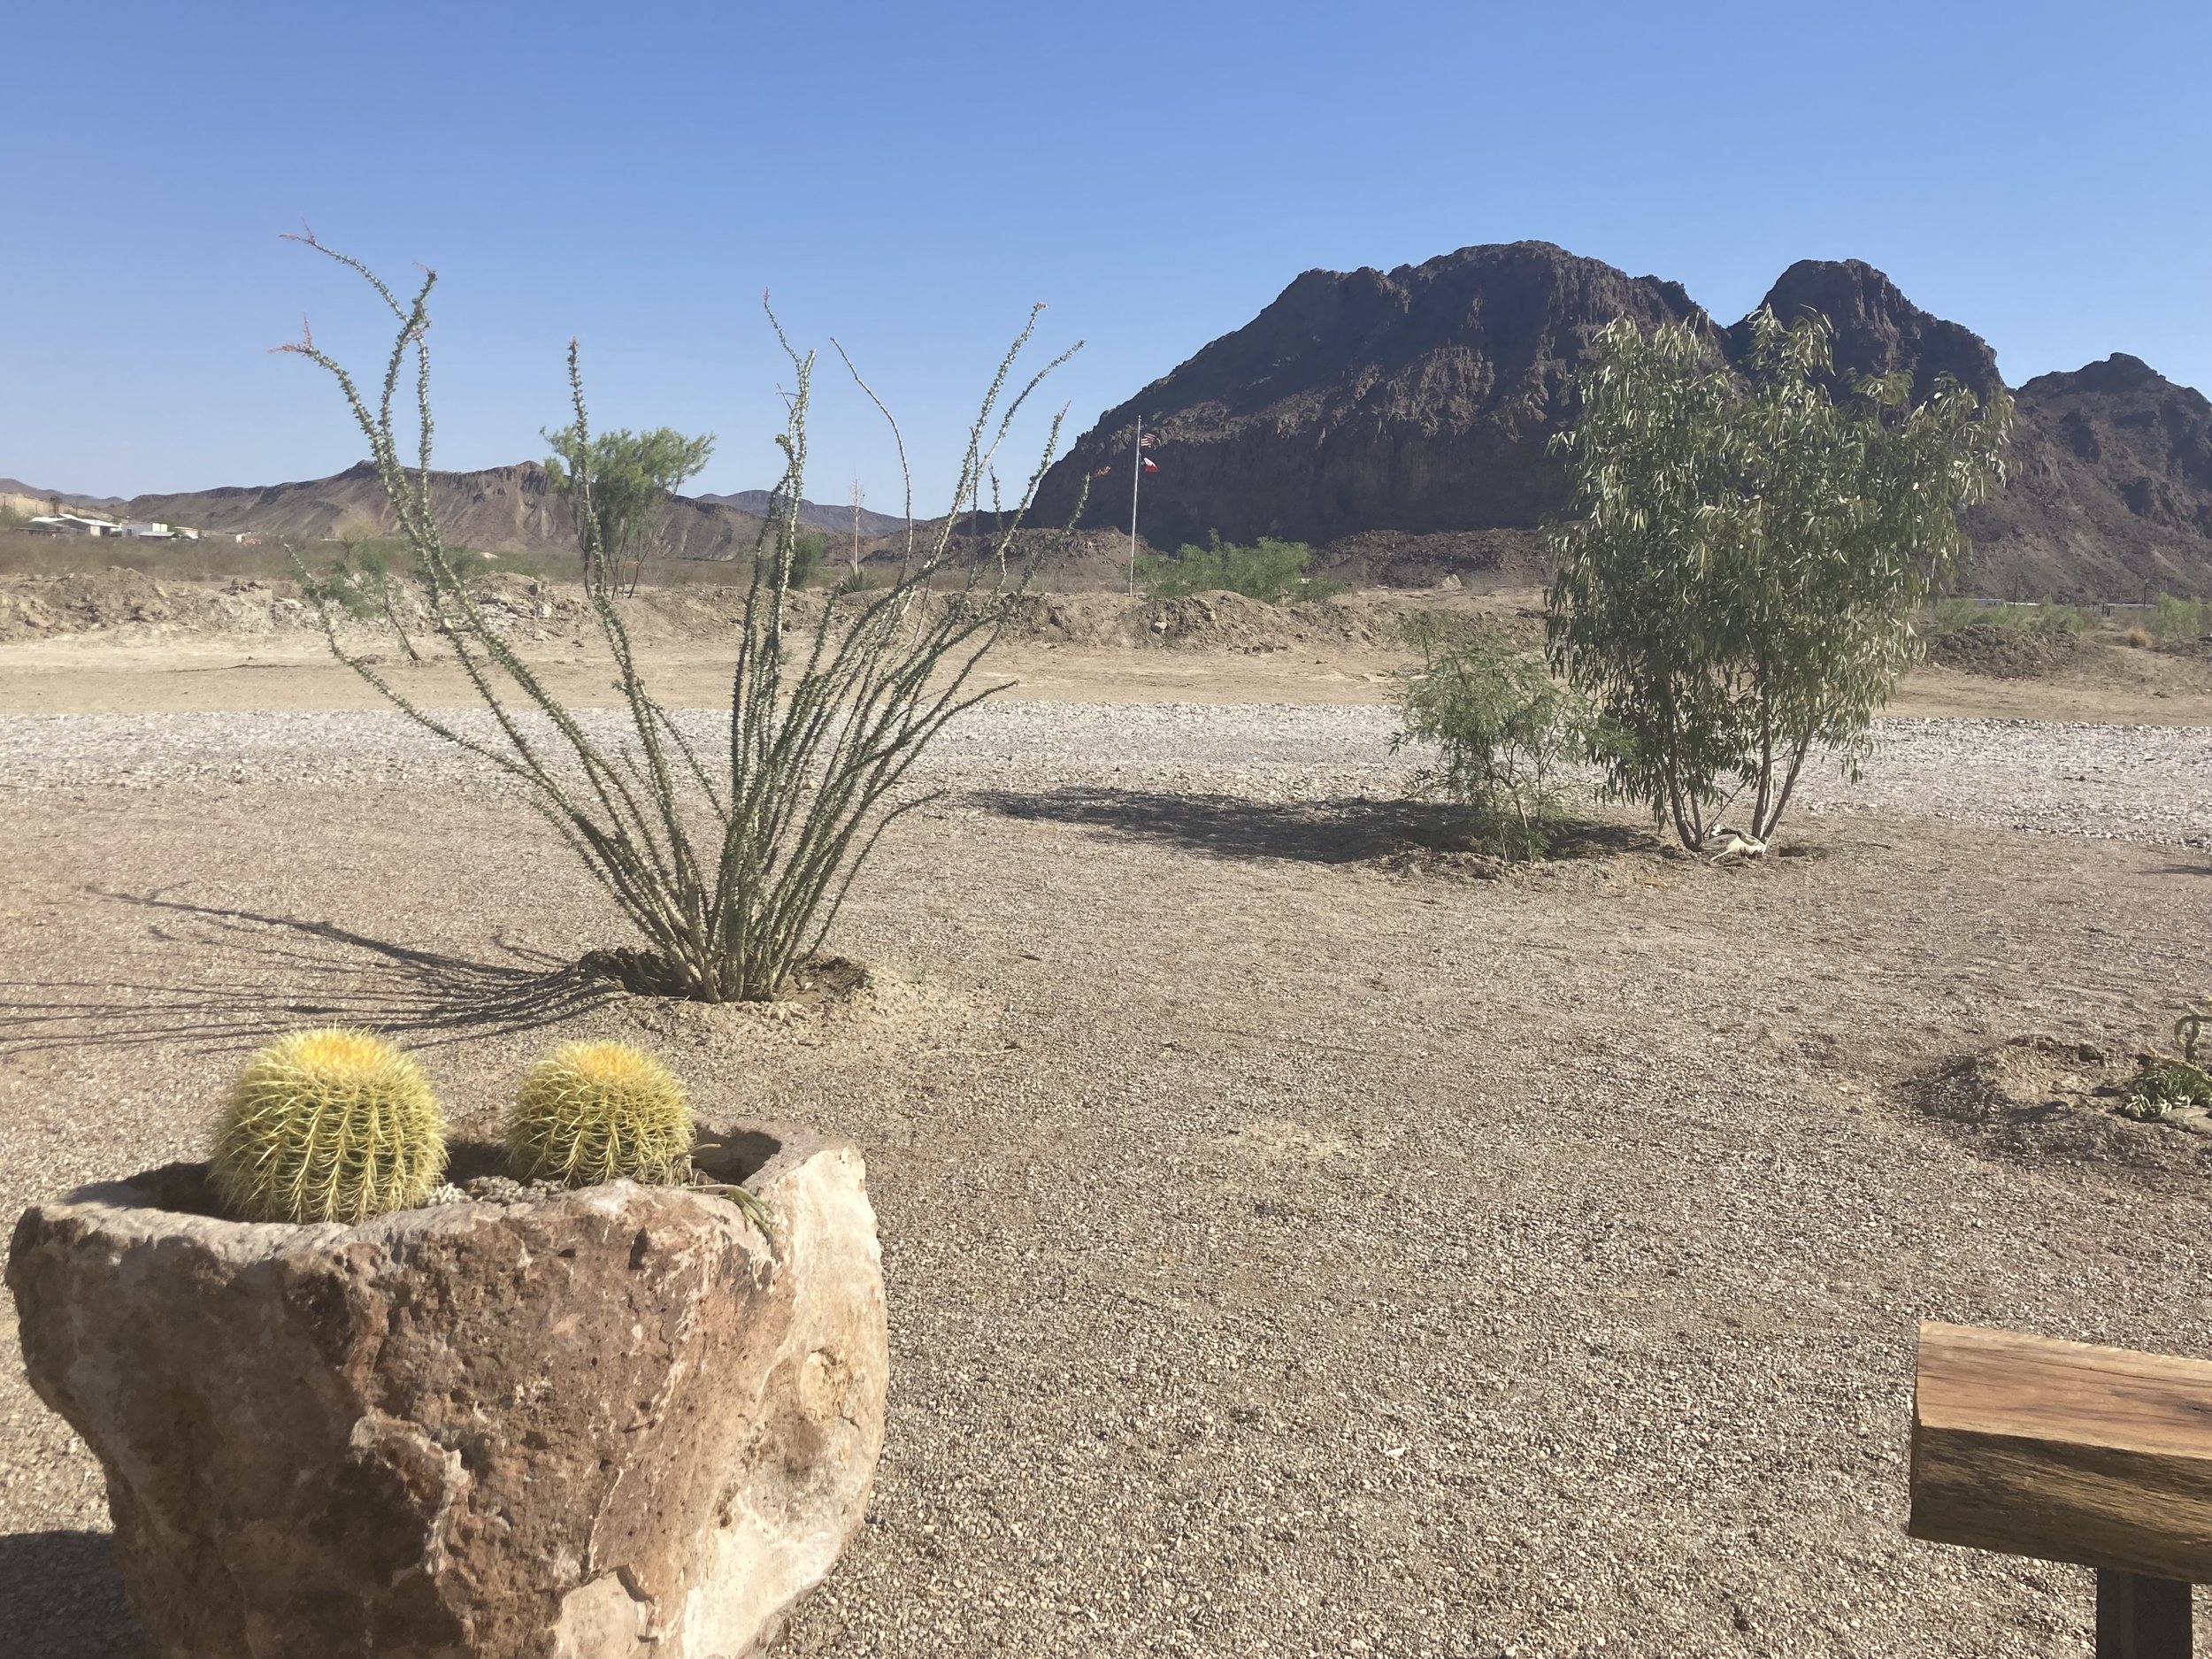 Views from the Cactus Garden